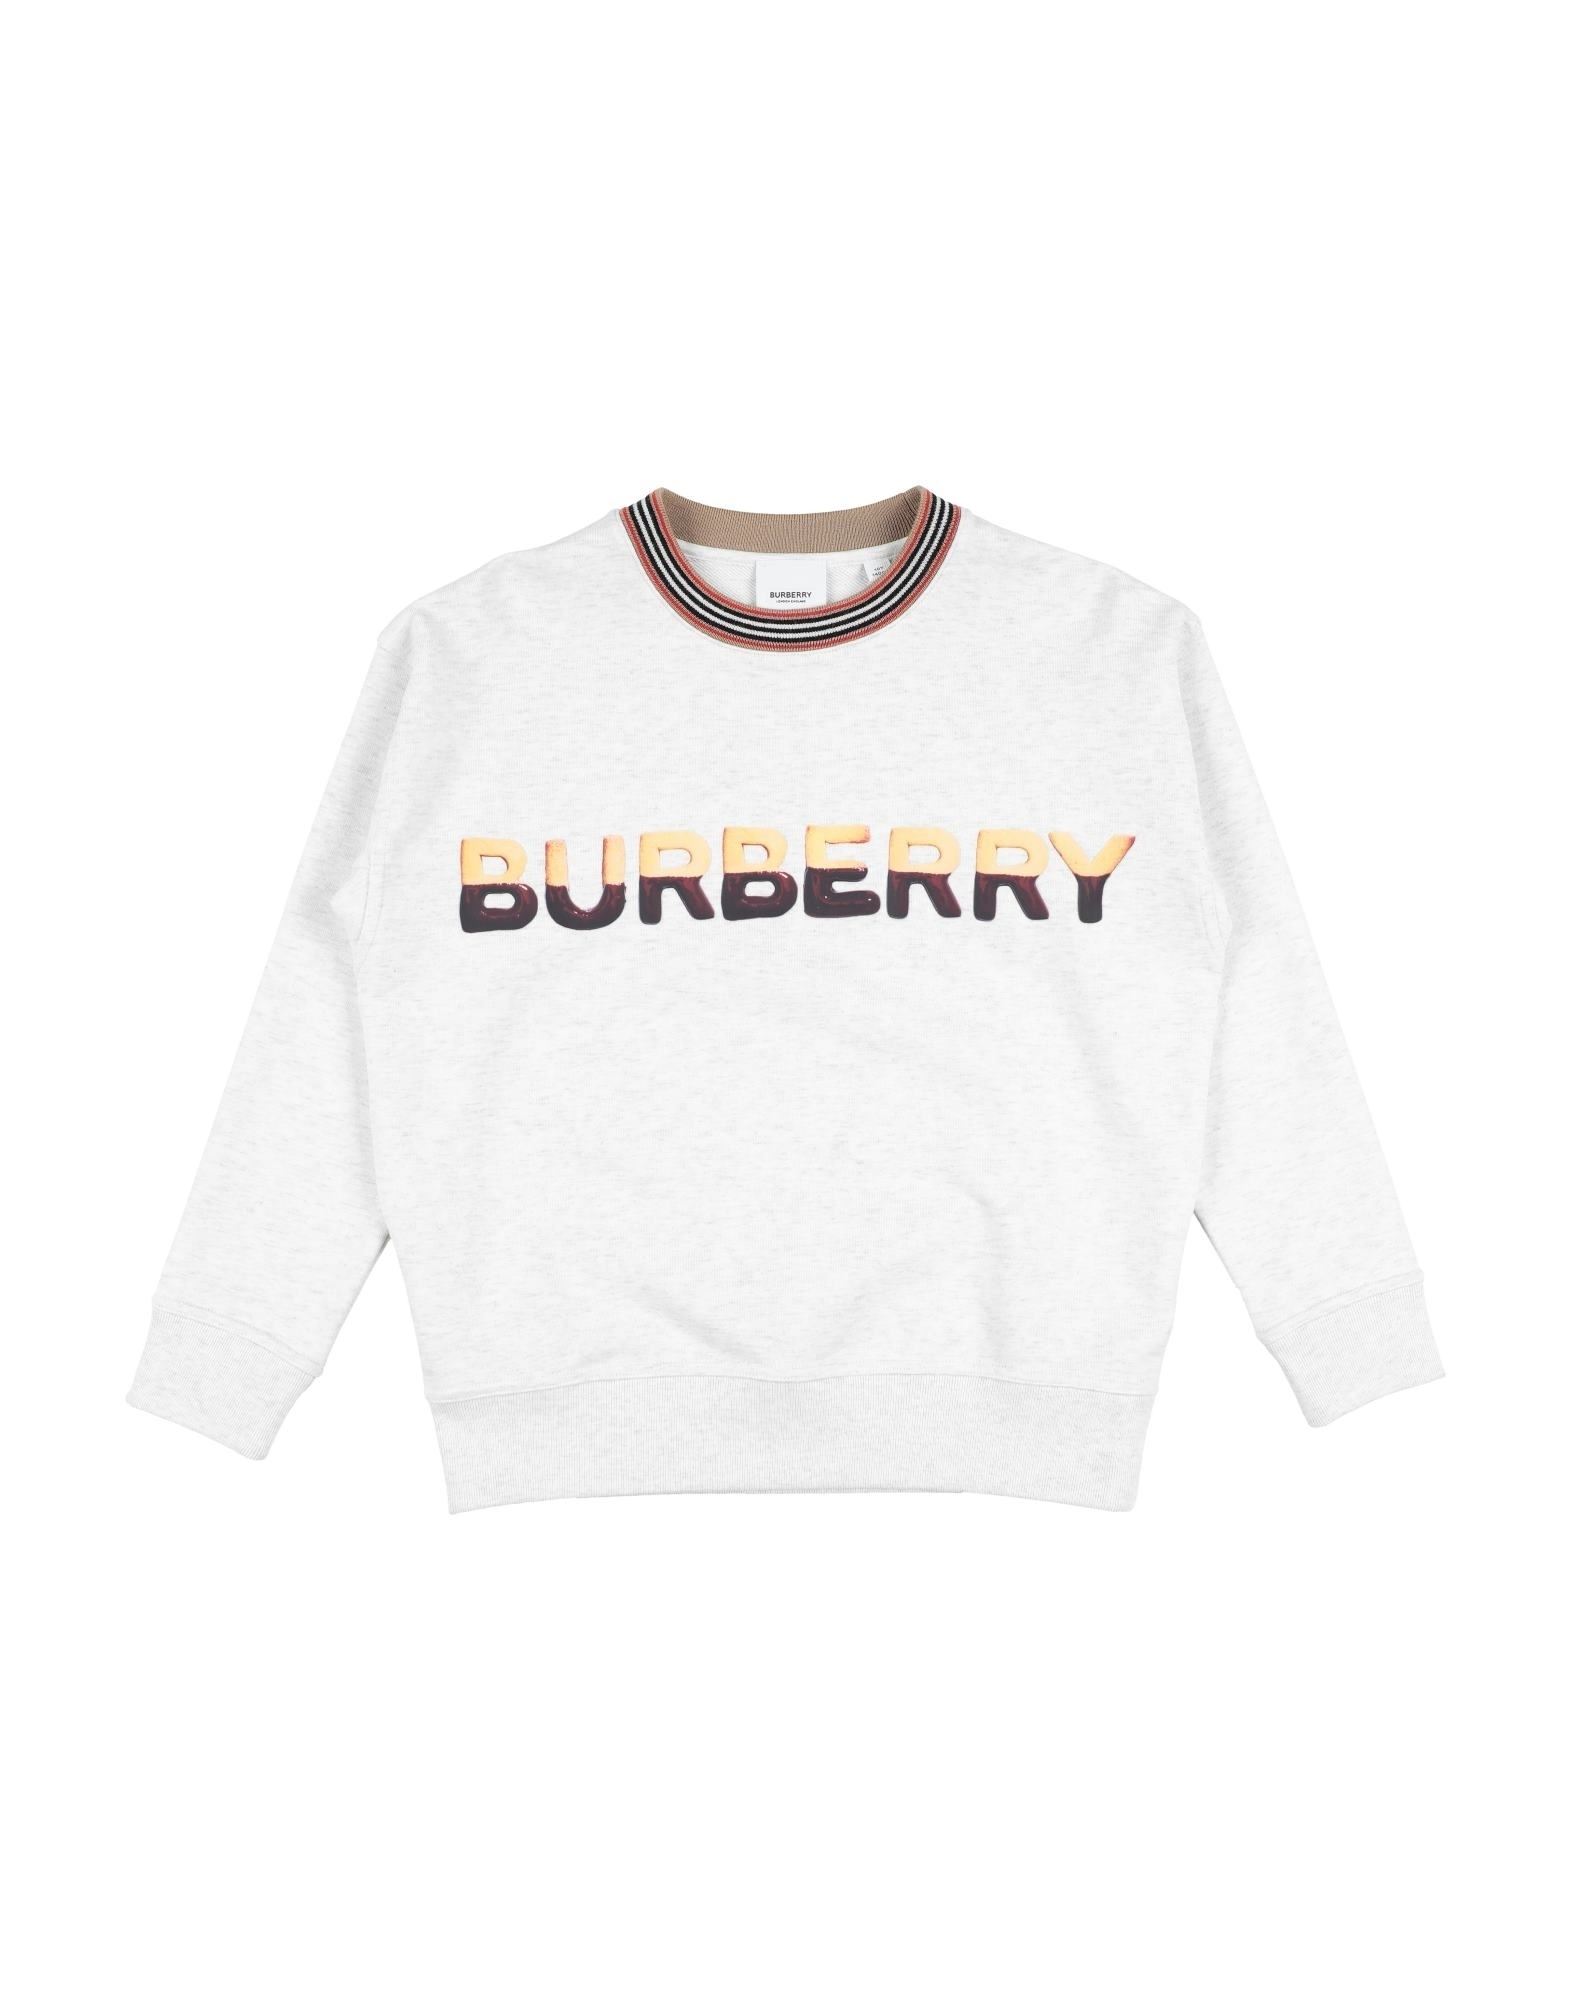 BURBERRY SWEATSHIRTS,12547655KD 4